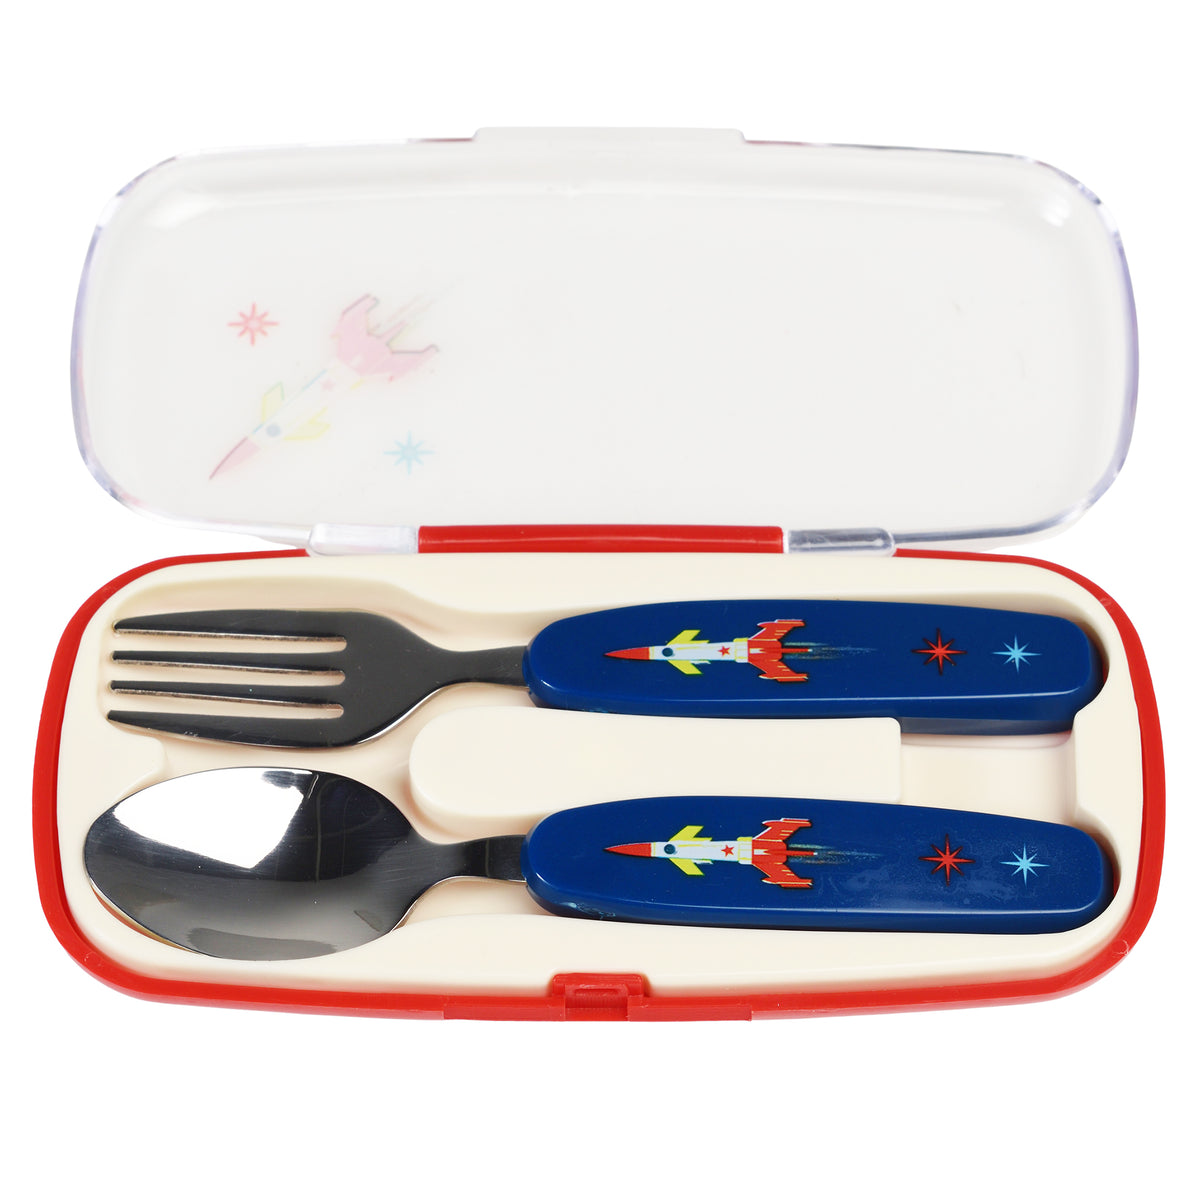 Space Age Children’s cutlery set